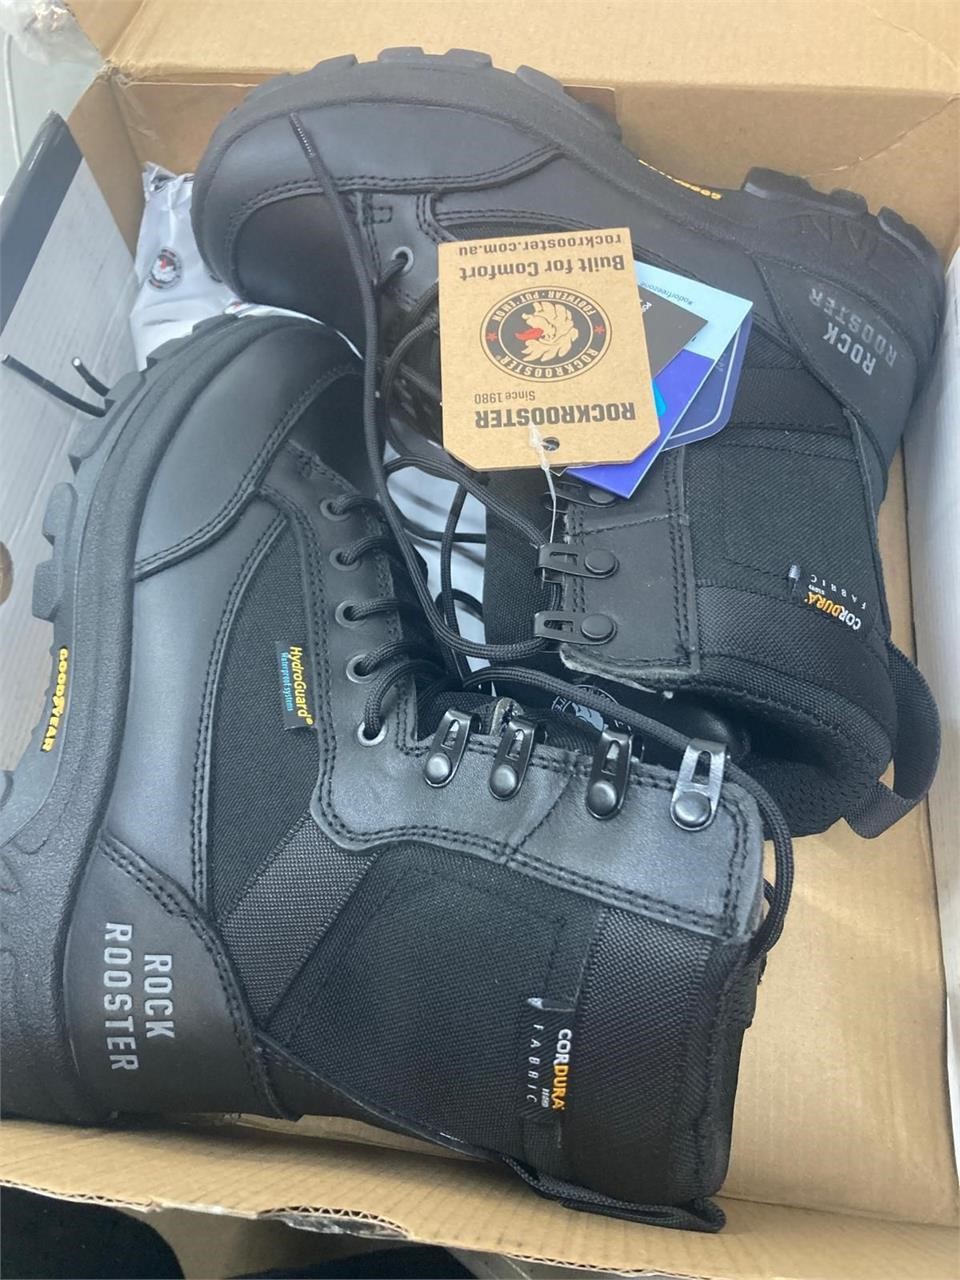 $190 (Size 7) Men's Work Boot (not steel toed)